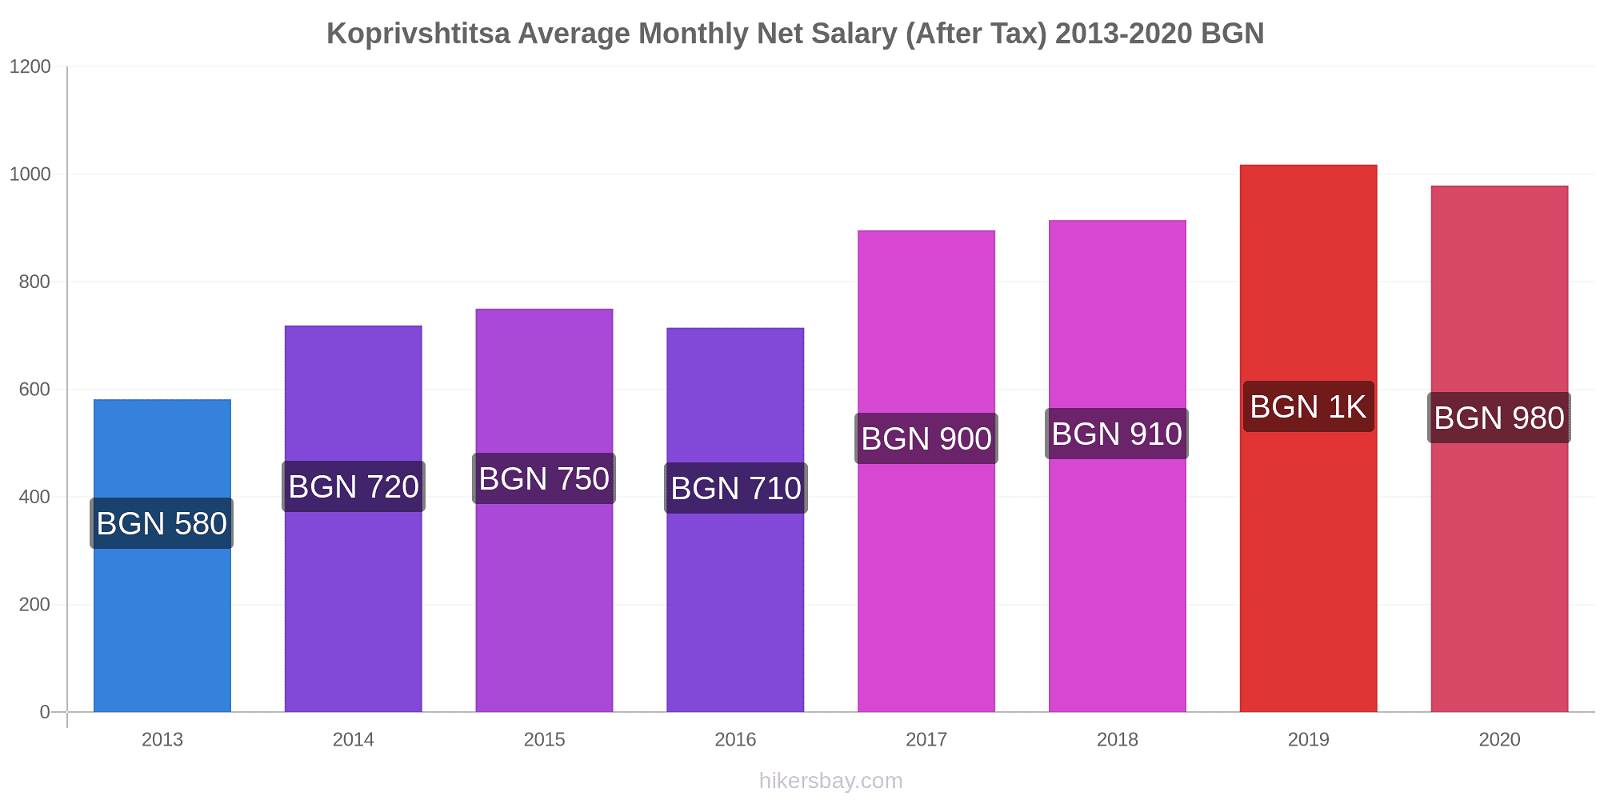 Koprivshtitsa price changes Average Monthly Net Salary (After Tax) hikersbay.com